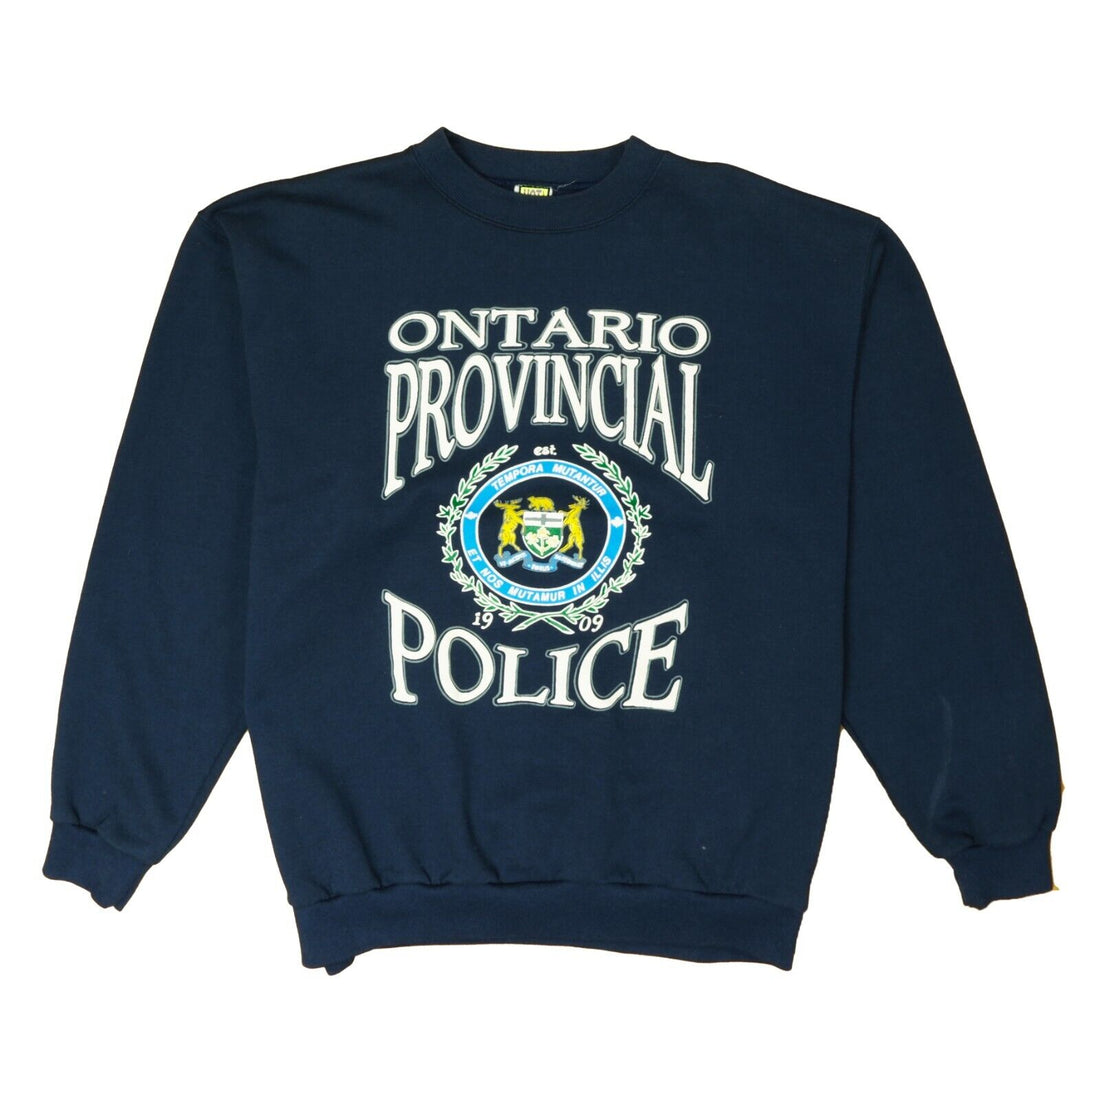 Vintage Ontario Provincial Police Crest Sweatshirt Crewneck Size Large Blue 90s